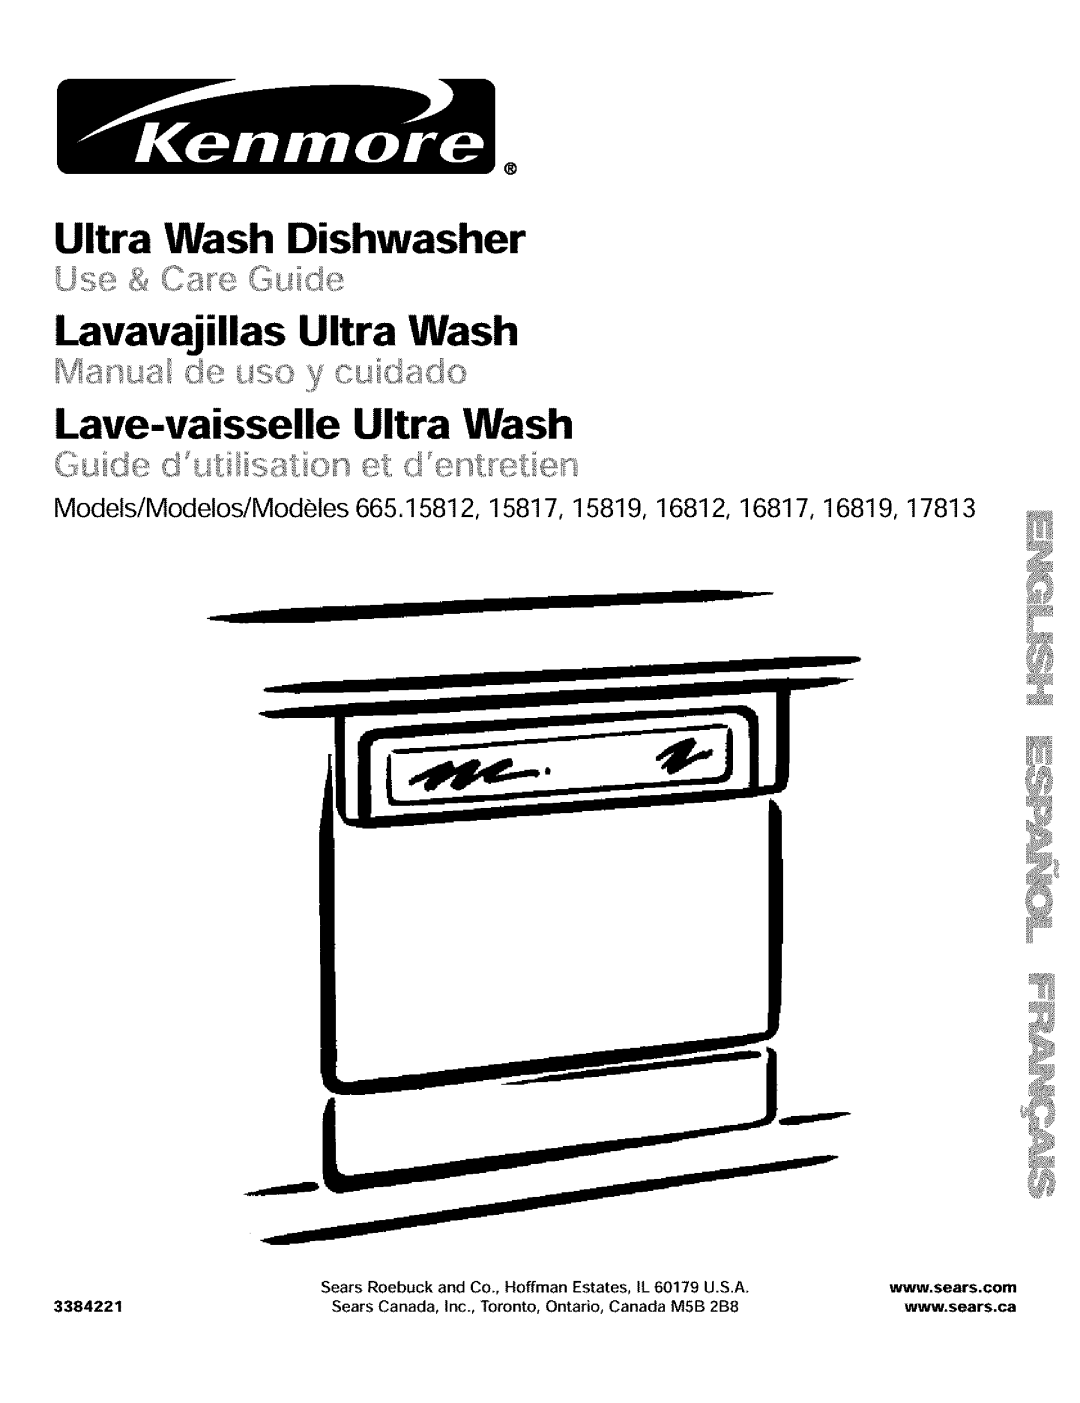 Kenmore 665.16817 manual Mq 9 p .%, Ultra Wash Dishwasher, Lavavajillas Ultra Wash, Lave-vaisselleUltra Wash, 3384221 